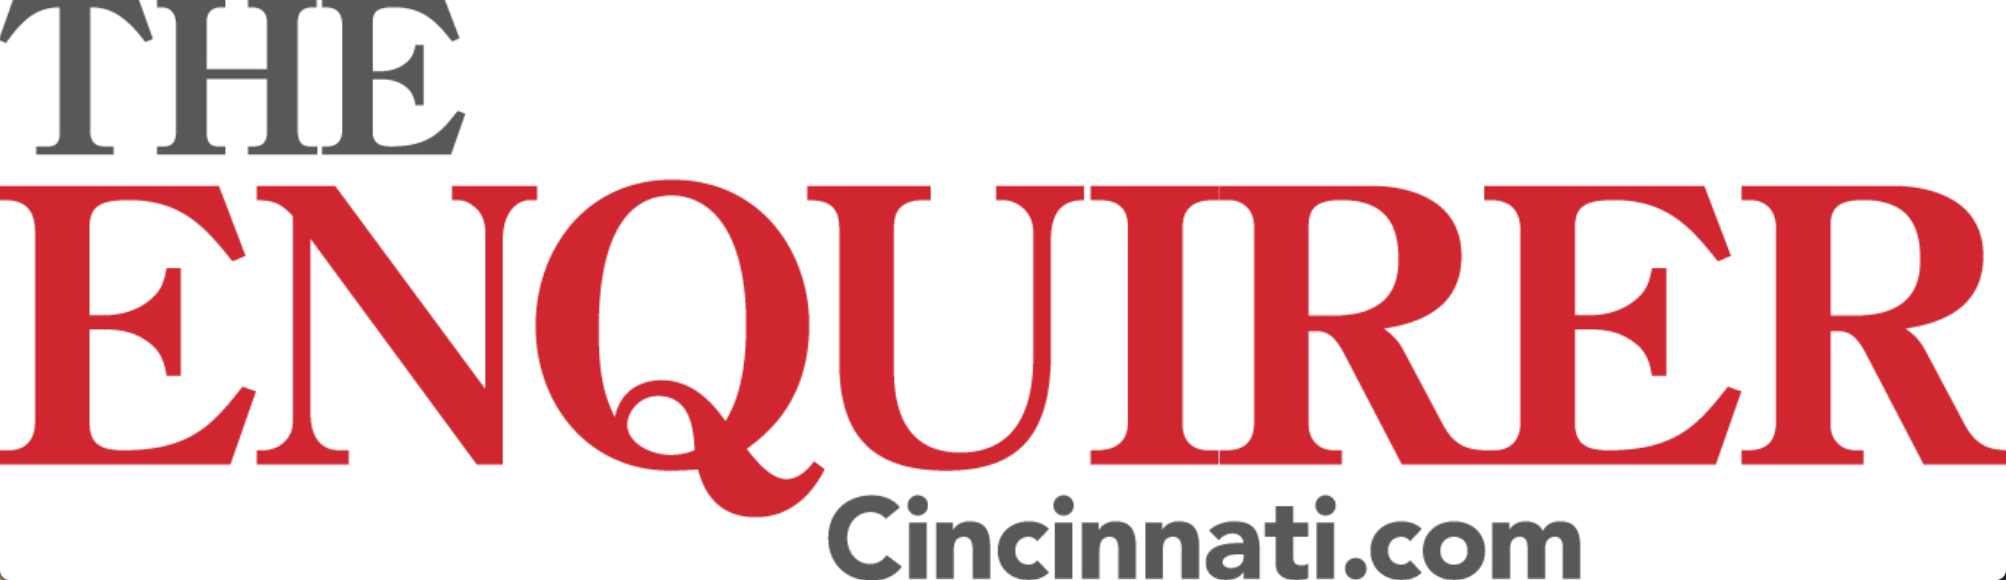 Cincinnati Enquirer.png